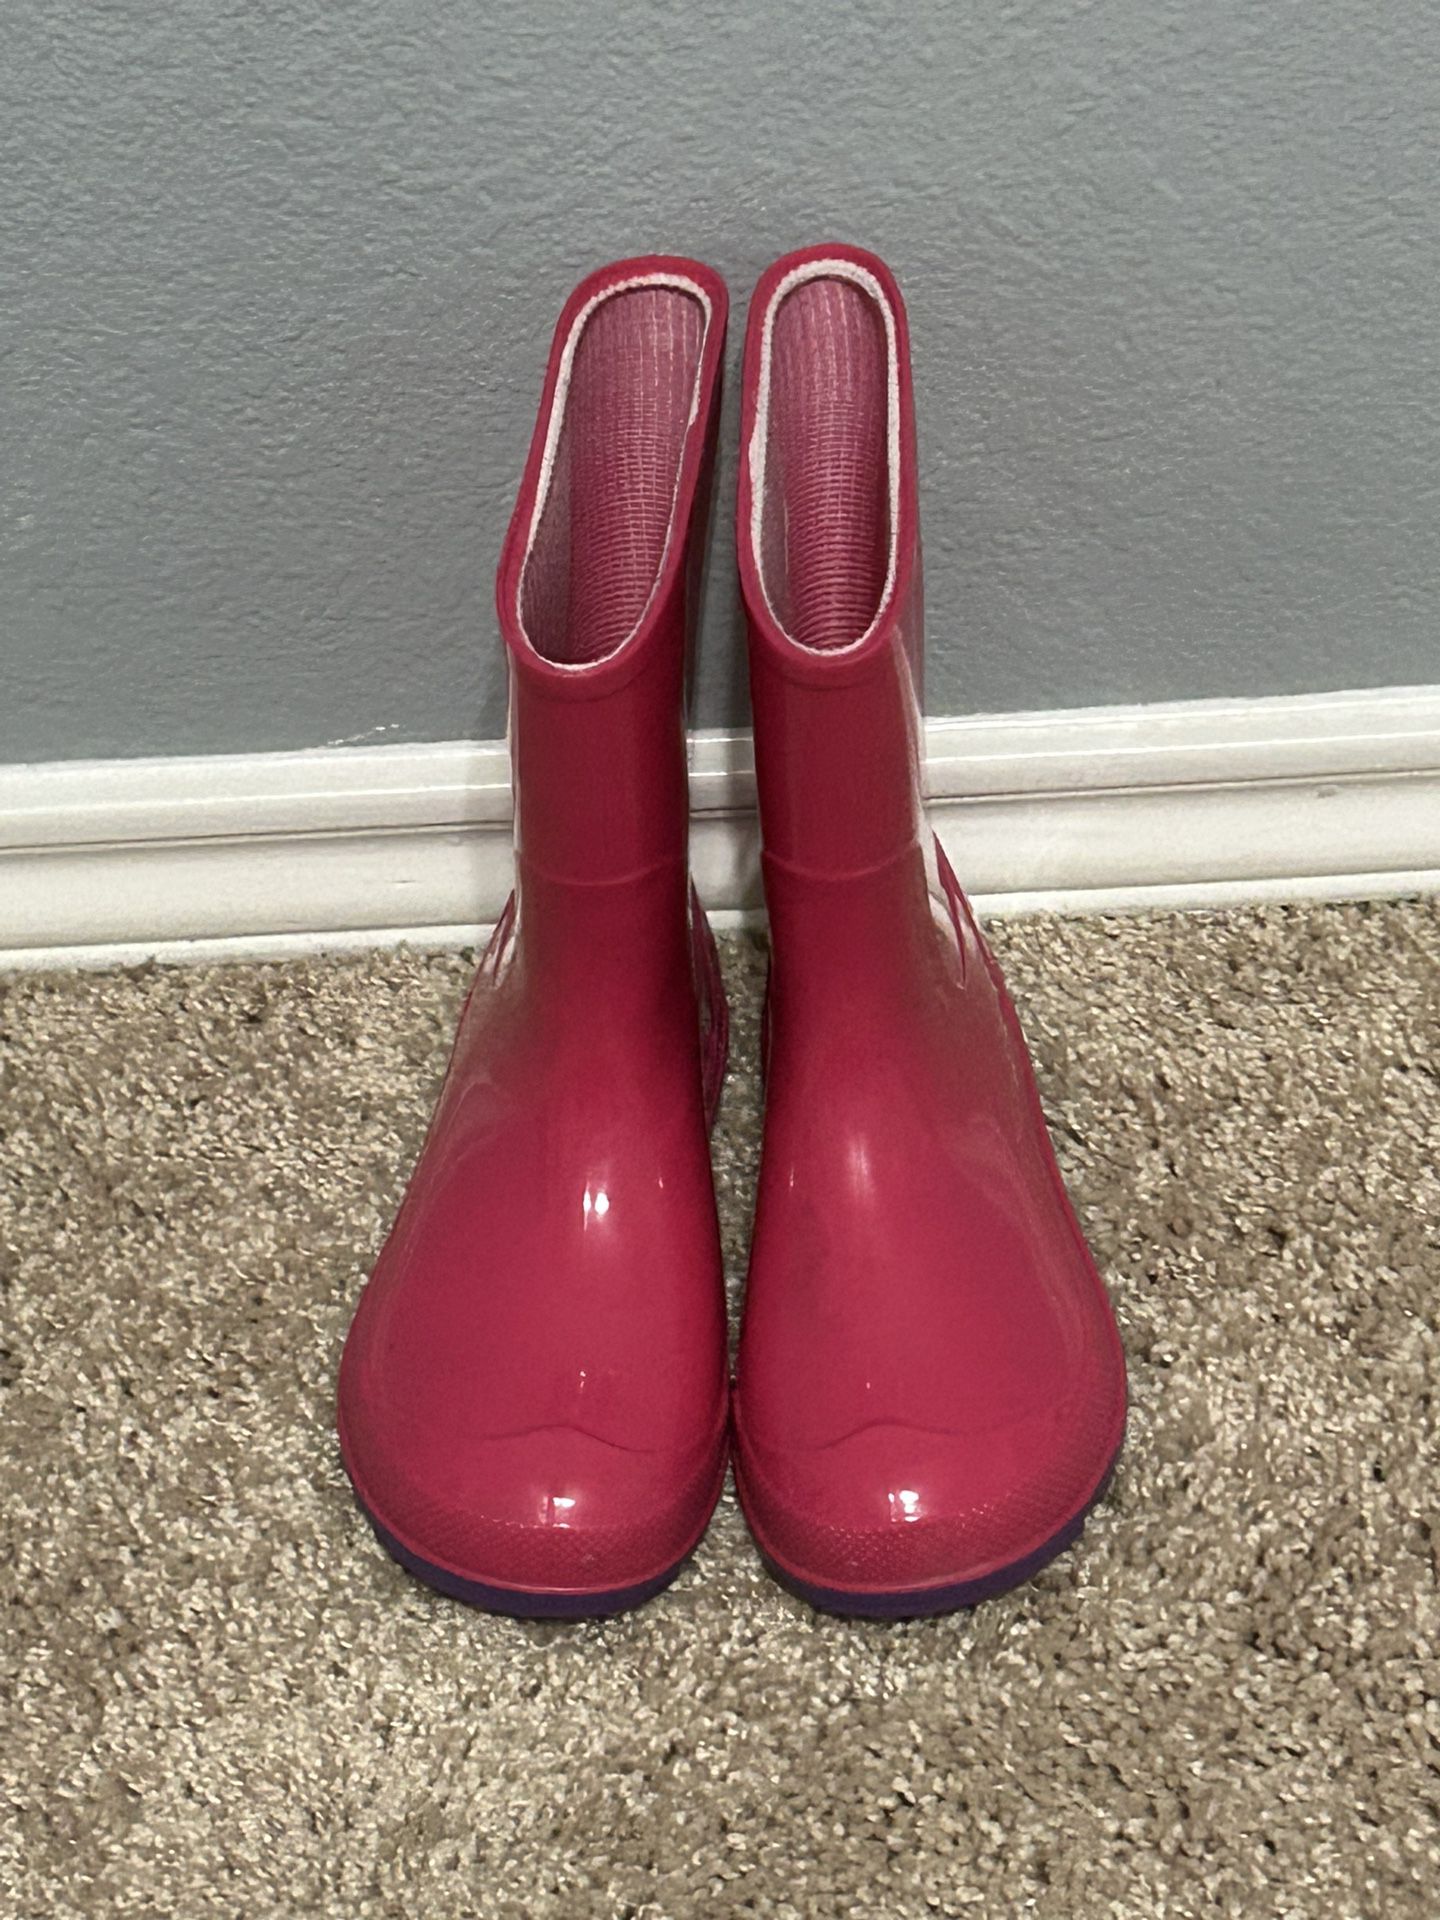 Kids Size 9/10 Pink & Purple Rain Boots - Like New Worn Once